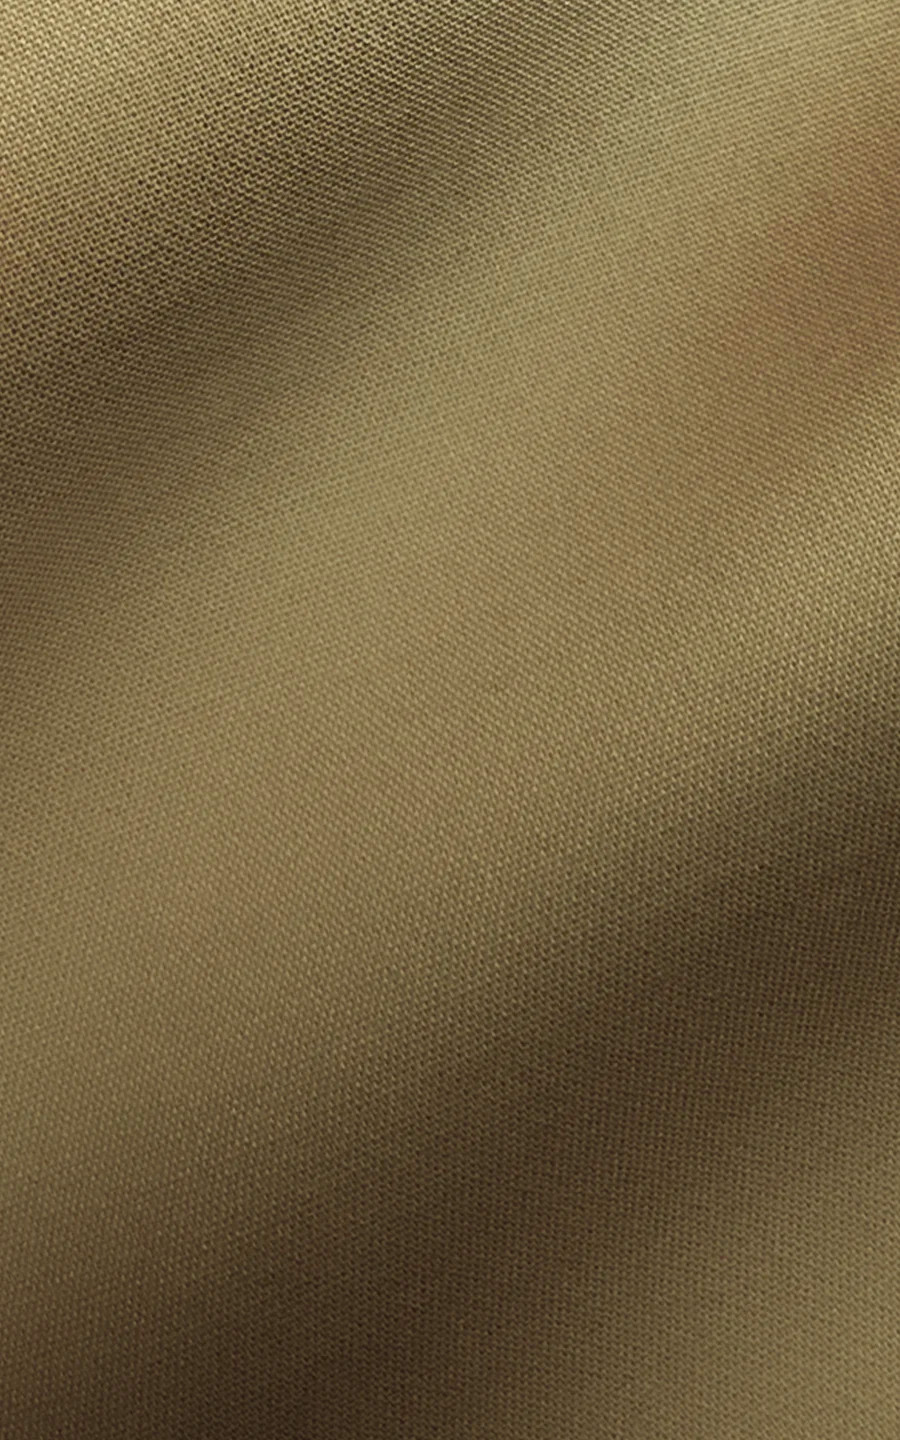 Fabric Skirt Plain Color | Red White Pattern Fabrics | Plain Material Skirt  - Fabric - Aliexpress